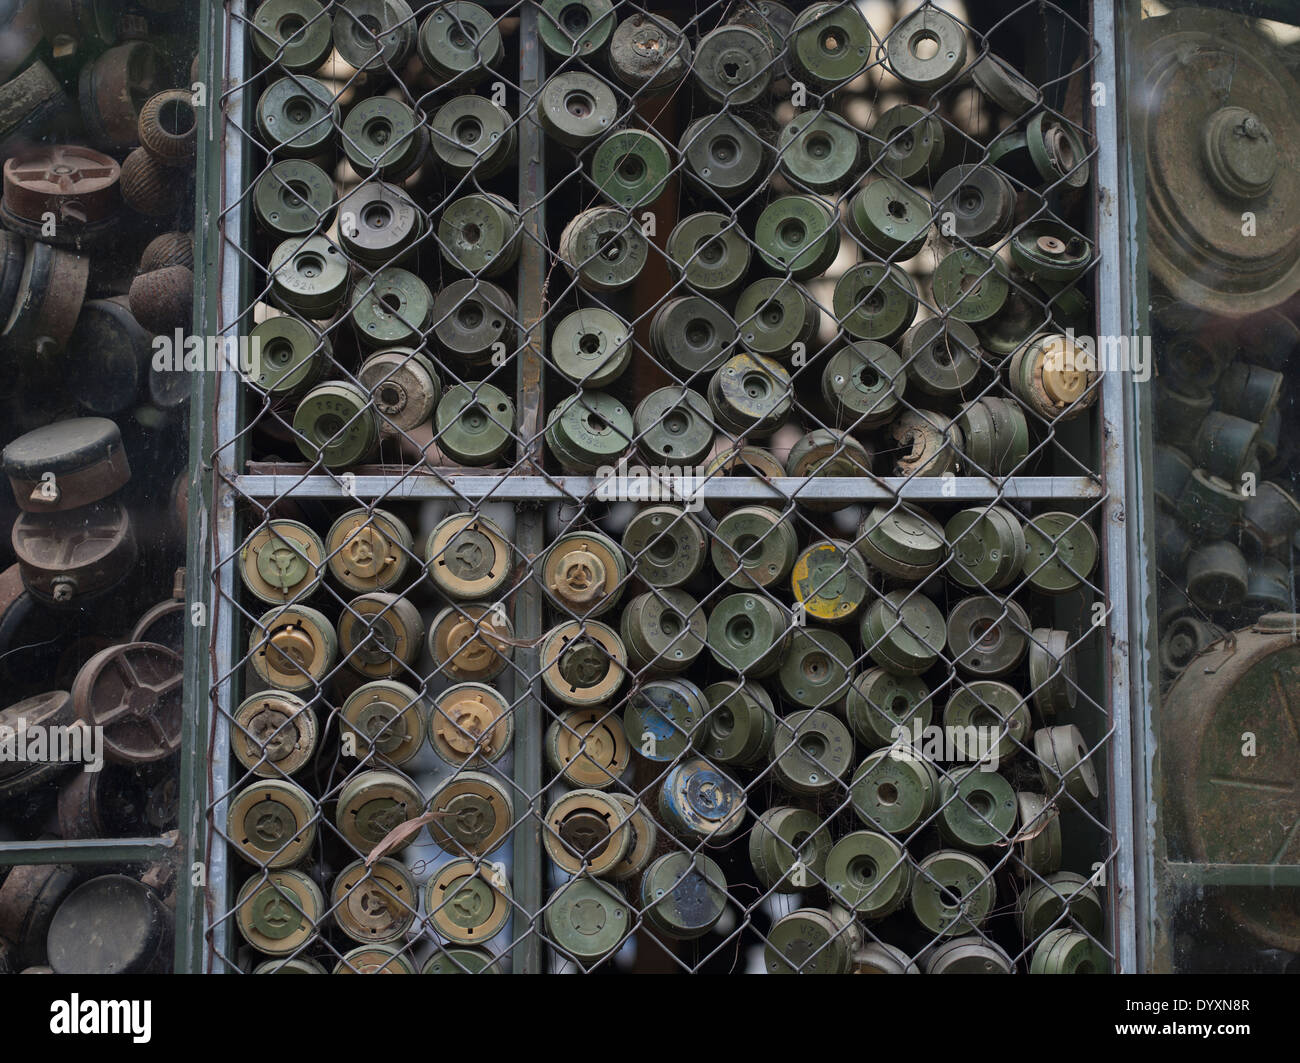 Cambodia Land Mine ( landmine )  Museum est. by Aki Ra. Siem Reap, Cambodia Stock Photo